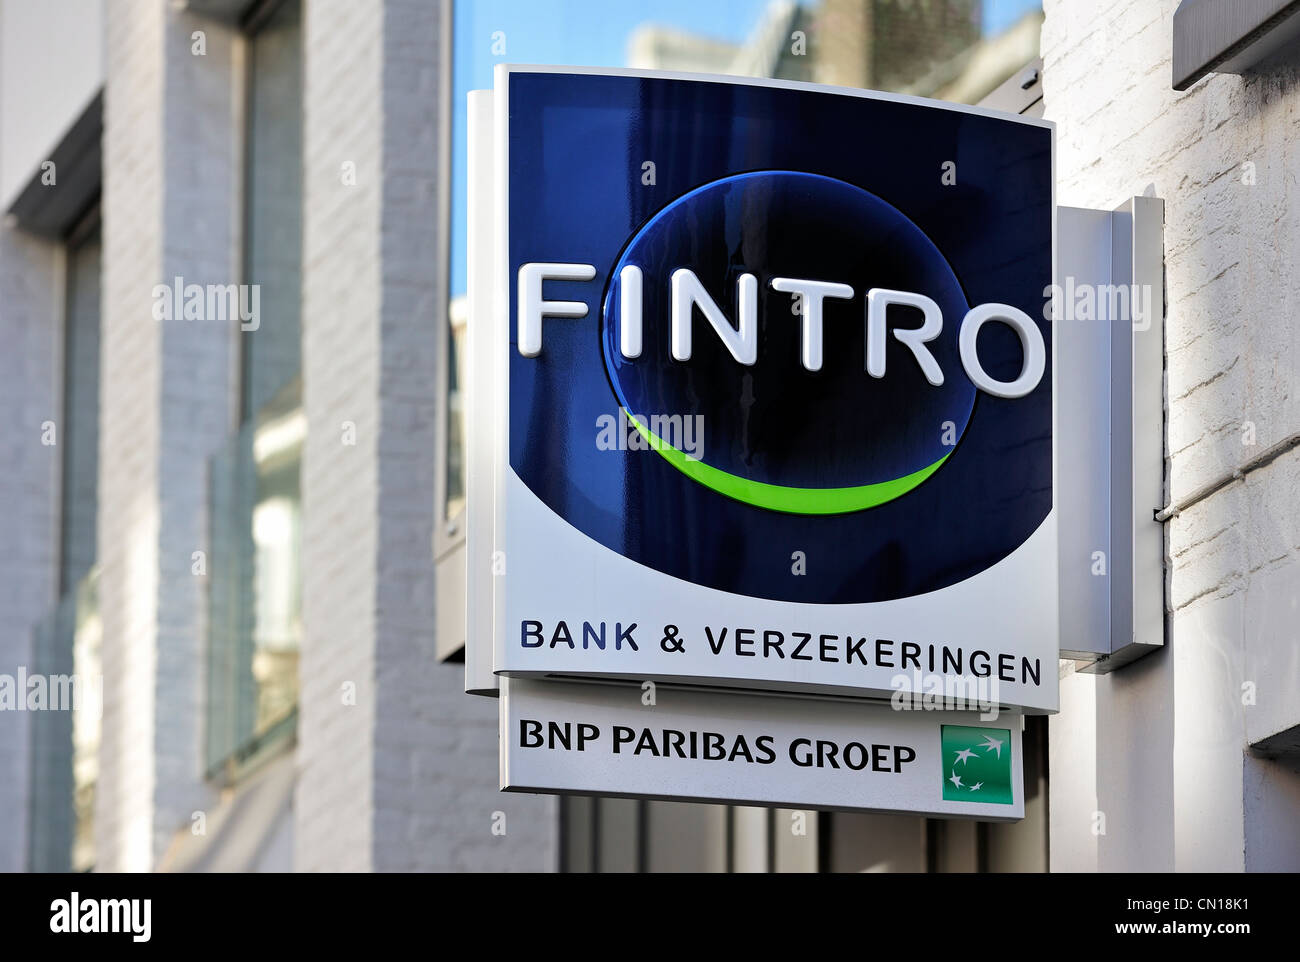 Signboard with logo of Fintro bank, Flanders, Belgium Stock Photo